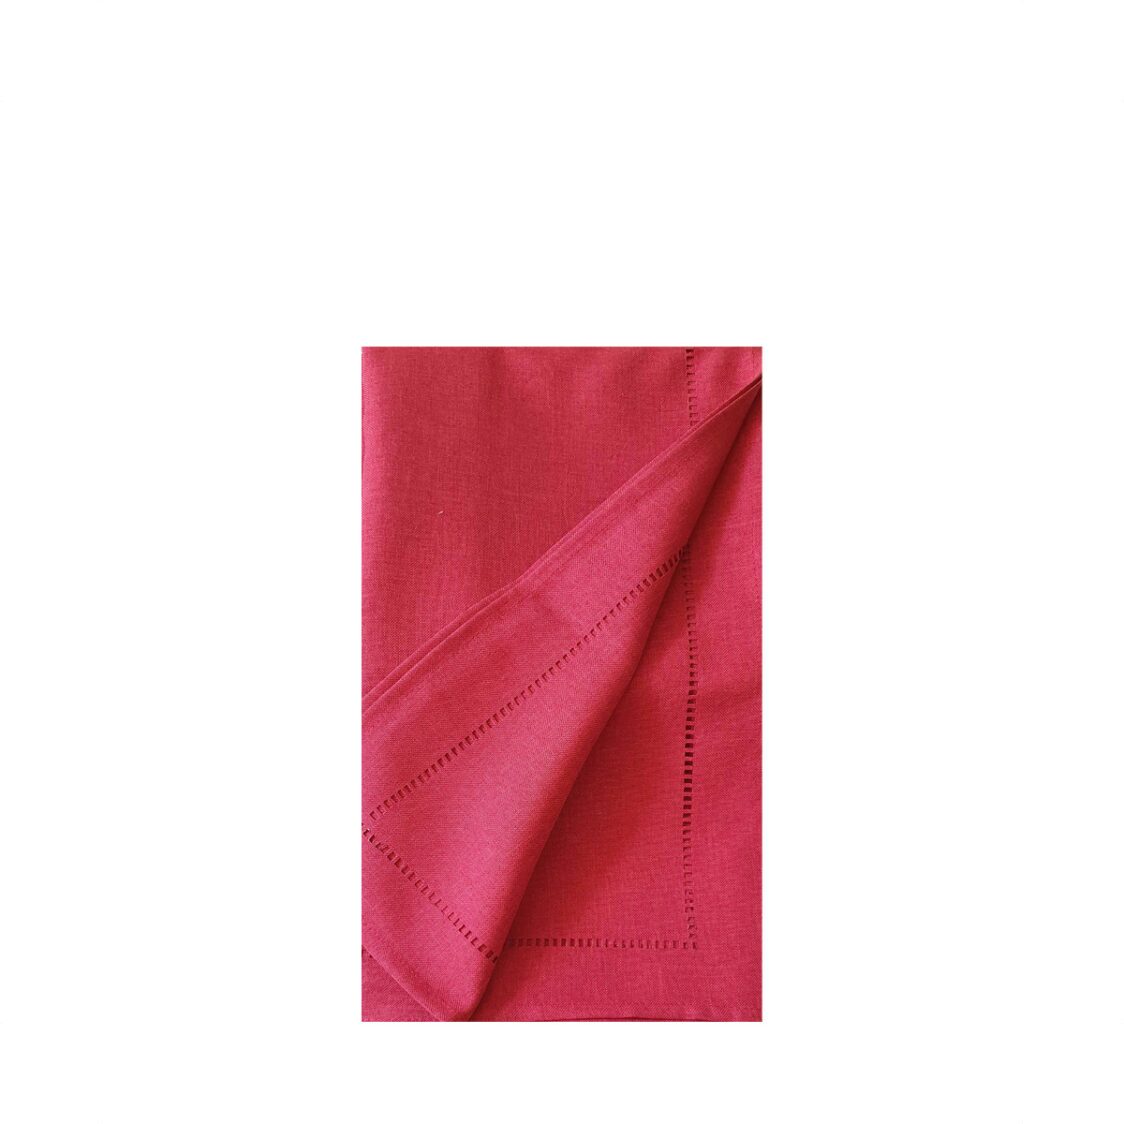 Rapee Sonia Tablecloth Red 150x230cm